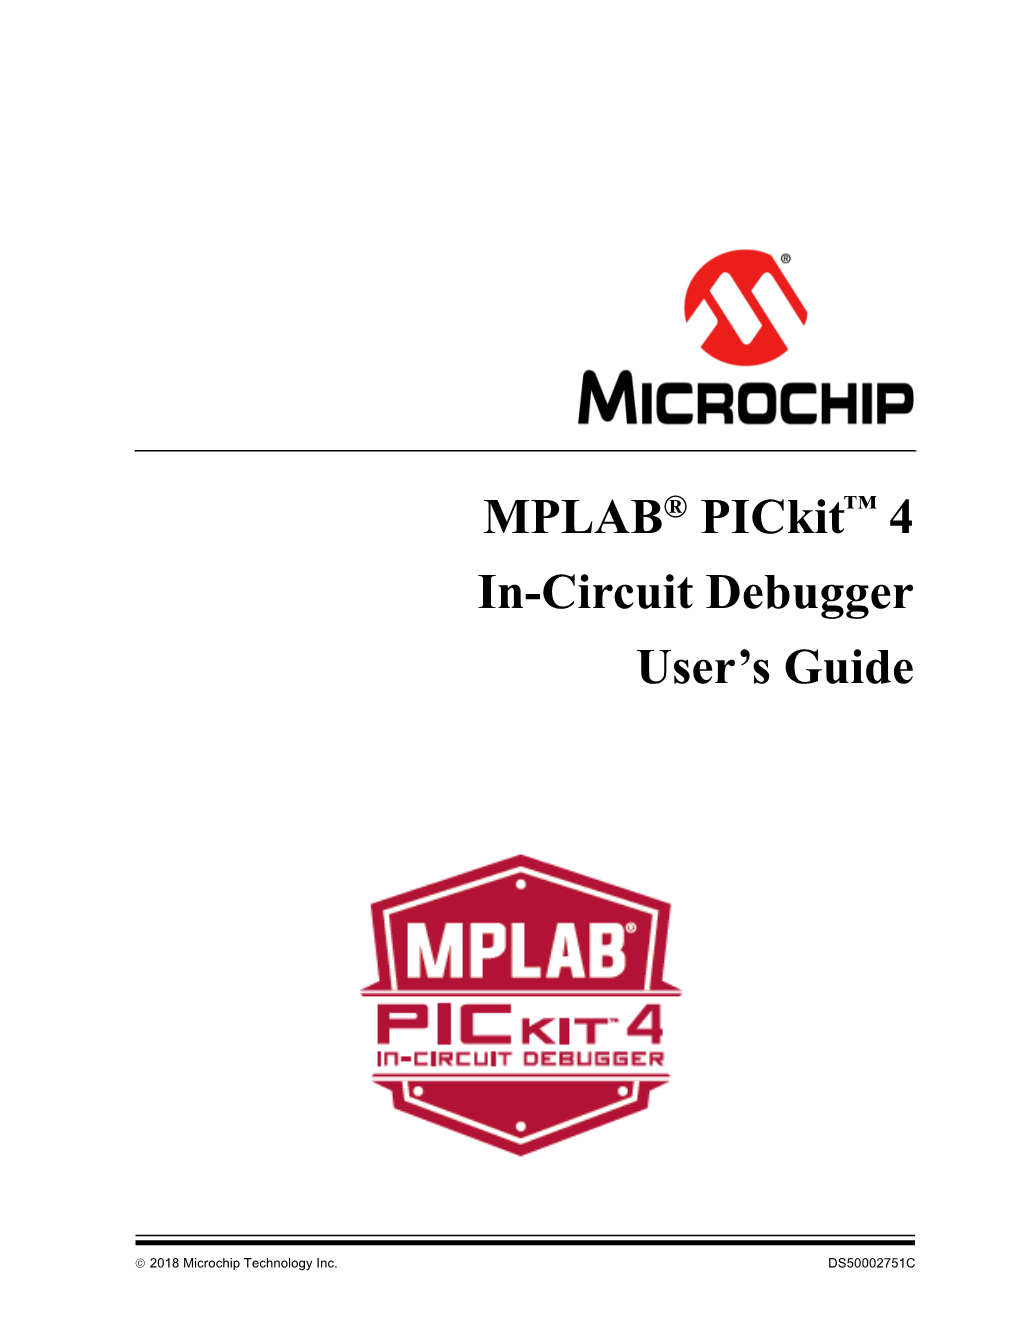 MPLAB® Pickit™ 4 In-Circuit Debugger User's Guide